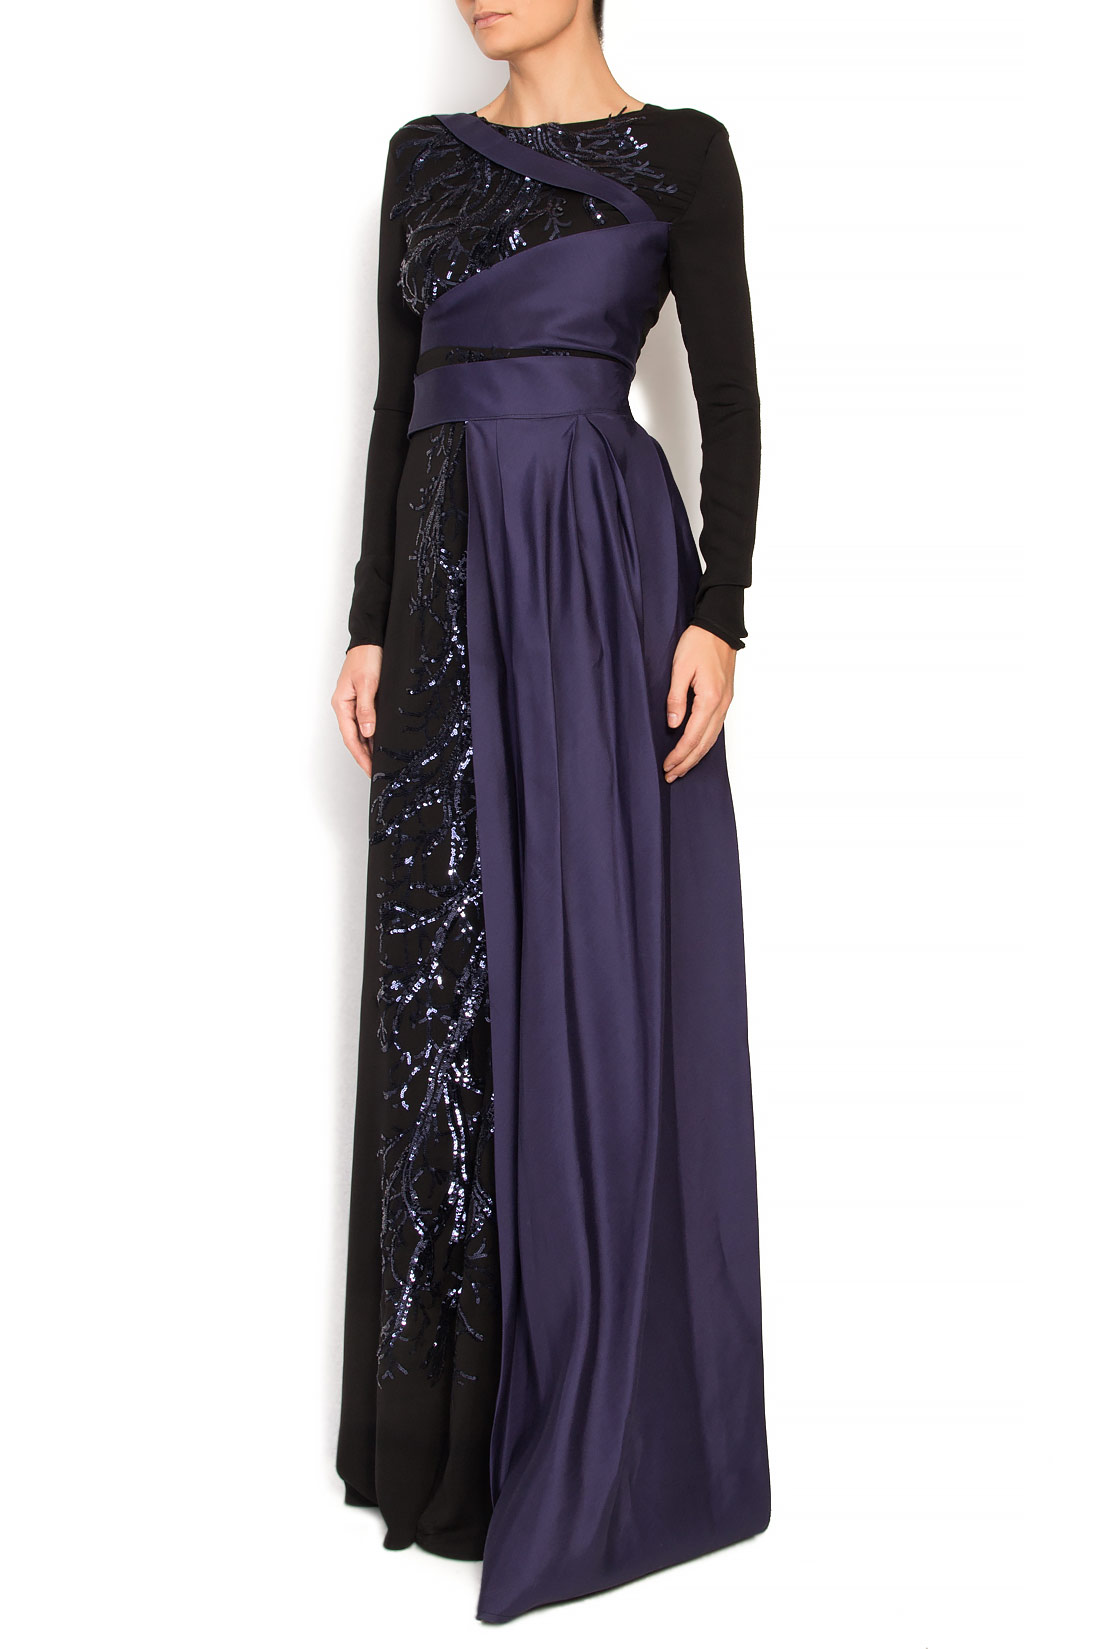 Veil maxi dress with sequins embroidery Simona Semen image 1